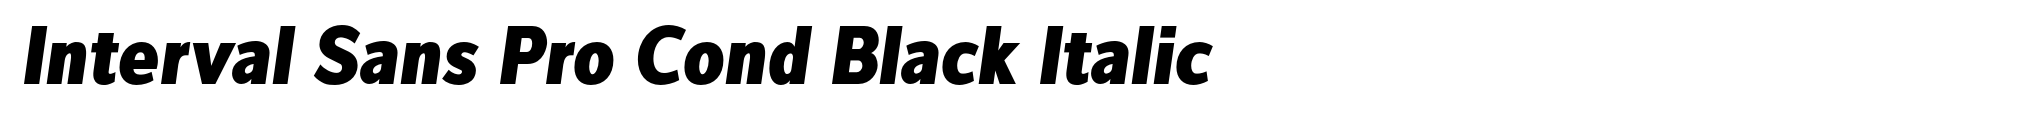 Interval Sans Pro Cond Black Italic image